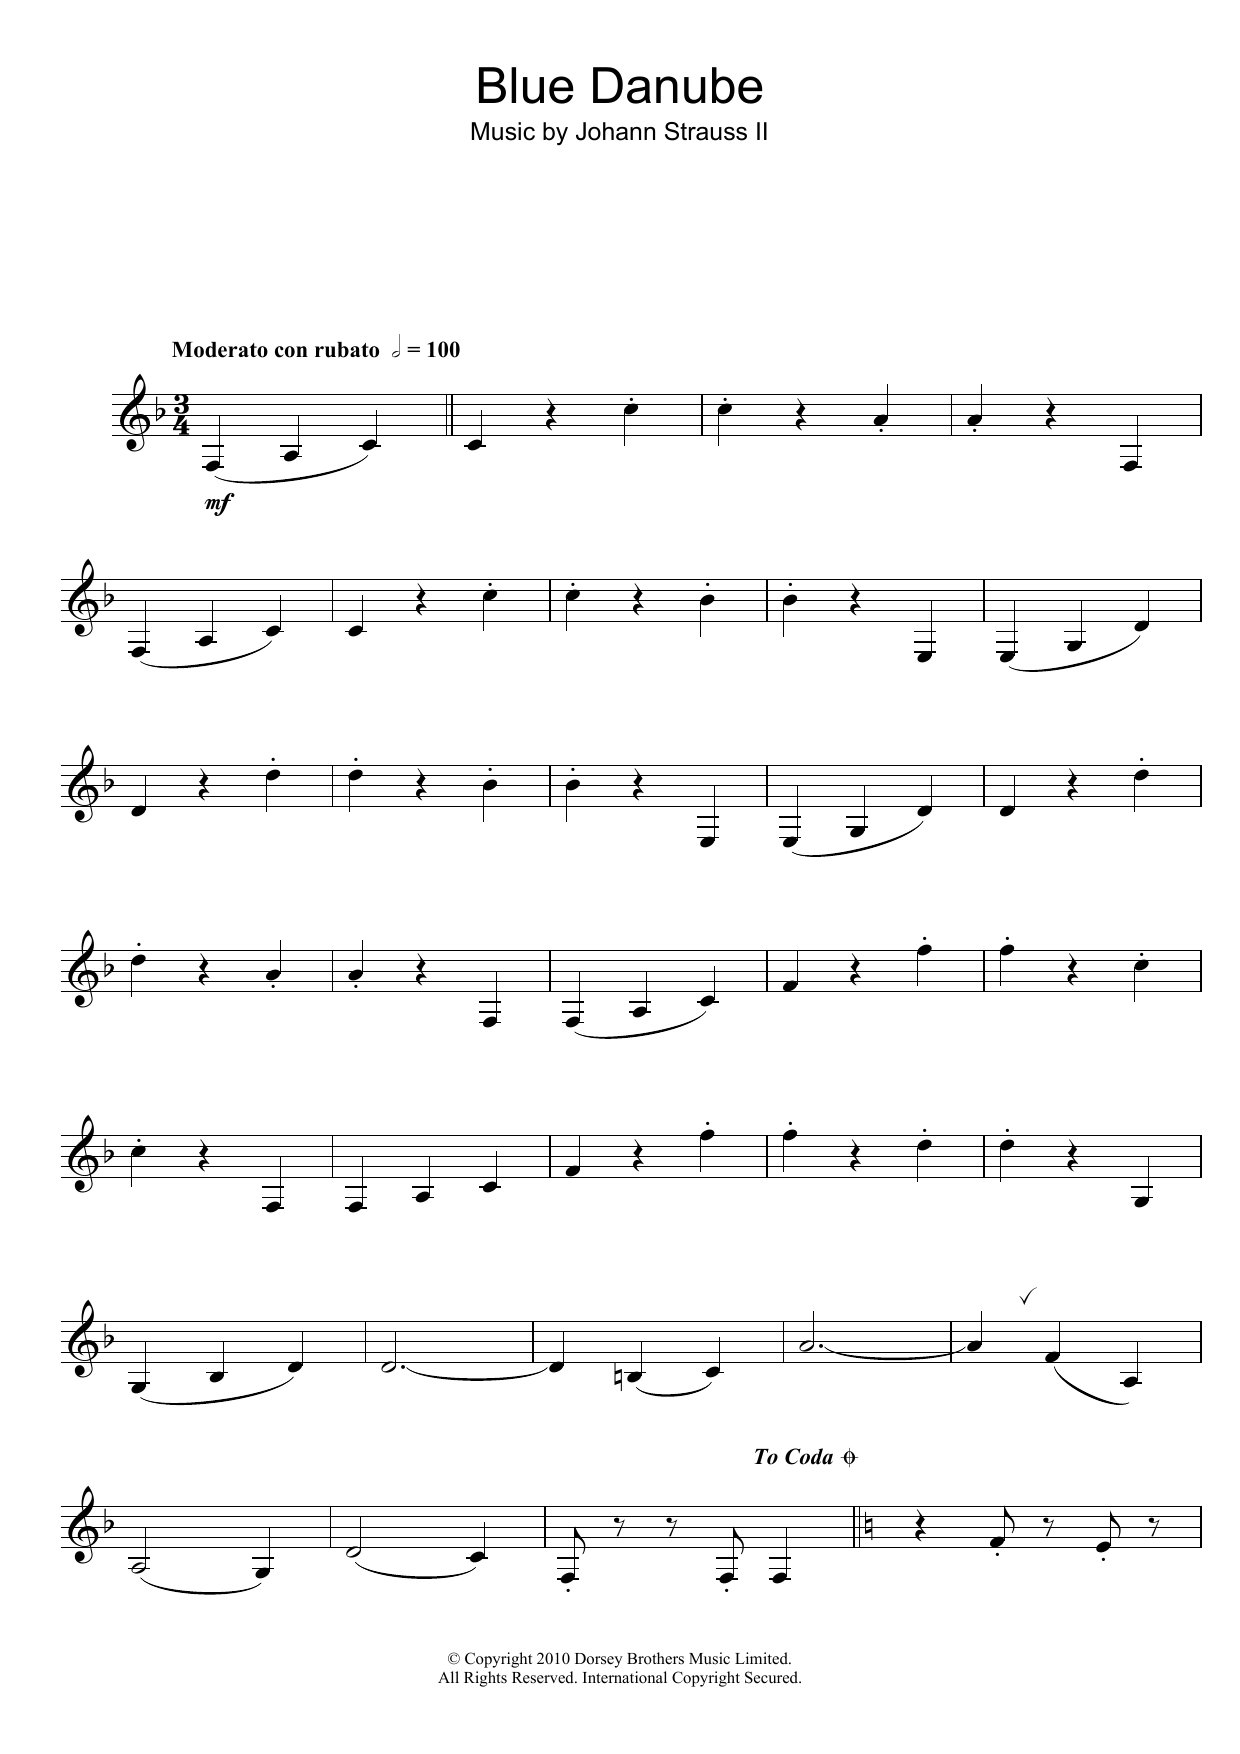 Johann Strauss II (On The Beautiful) The Blue Danube sheet music notes printable PDF score